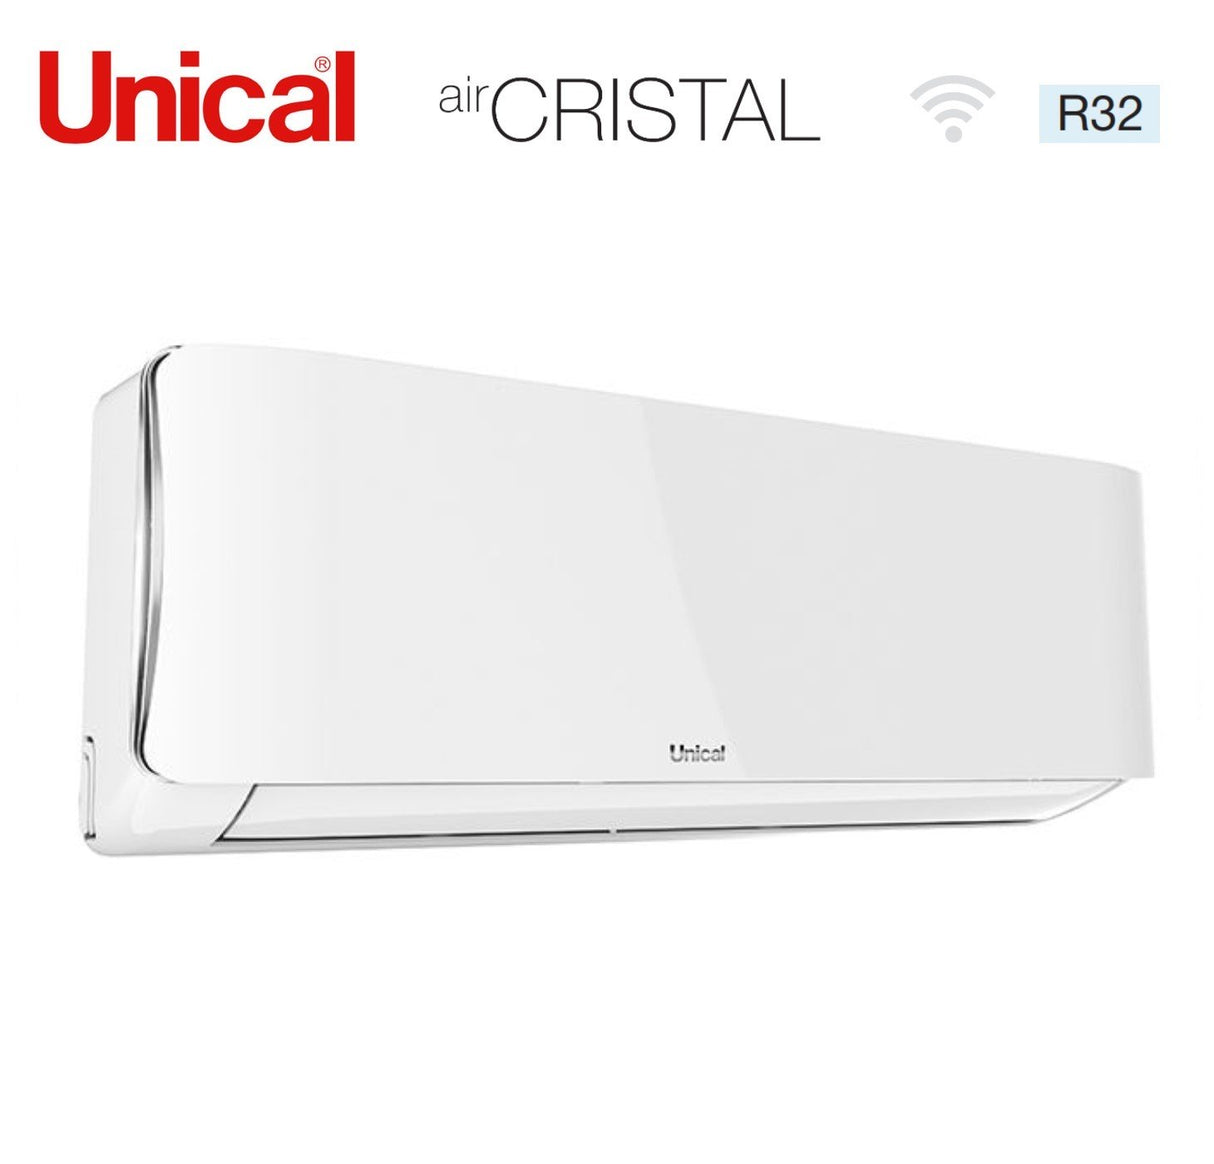 immagine-3-unical-climatizzatore-condizionatore-unical-dual-split-inverter-serie-air-cristal-1013-con-xmx2-18he-r-32-wi-fi-optional-1000013000-ean-8055776917672